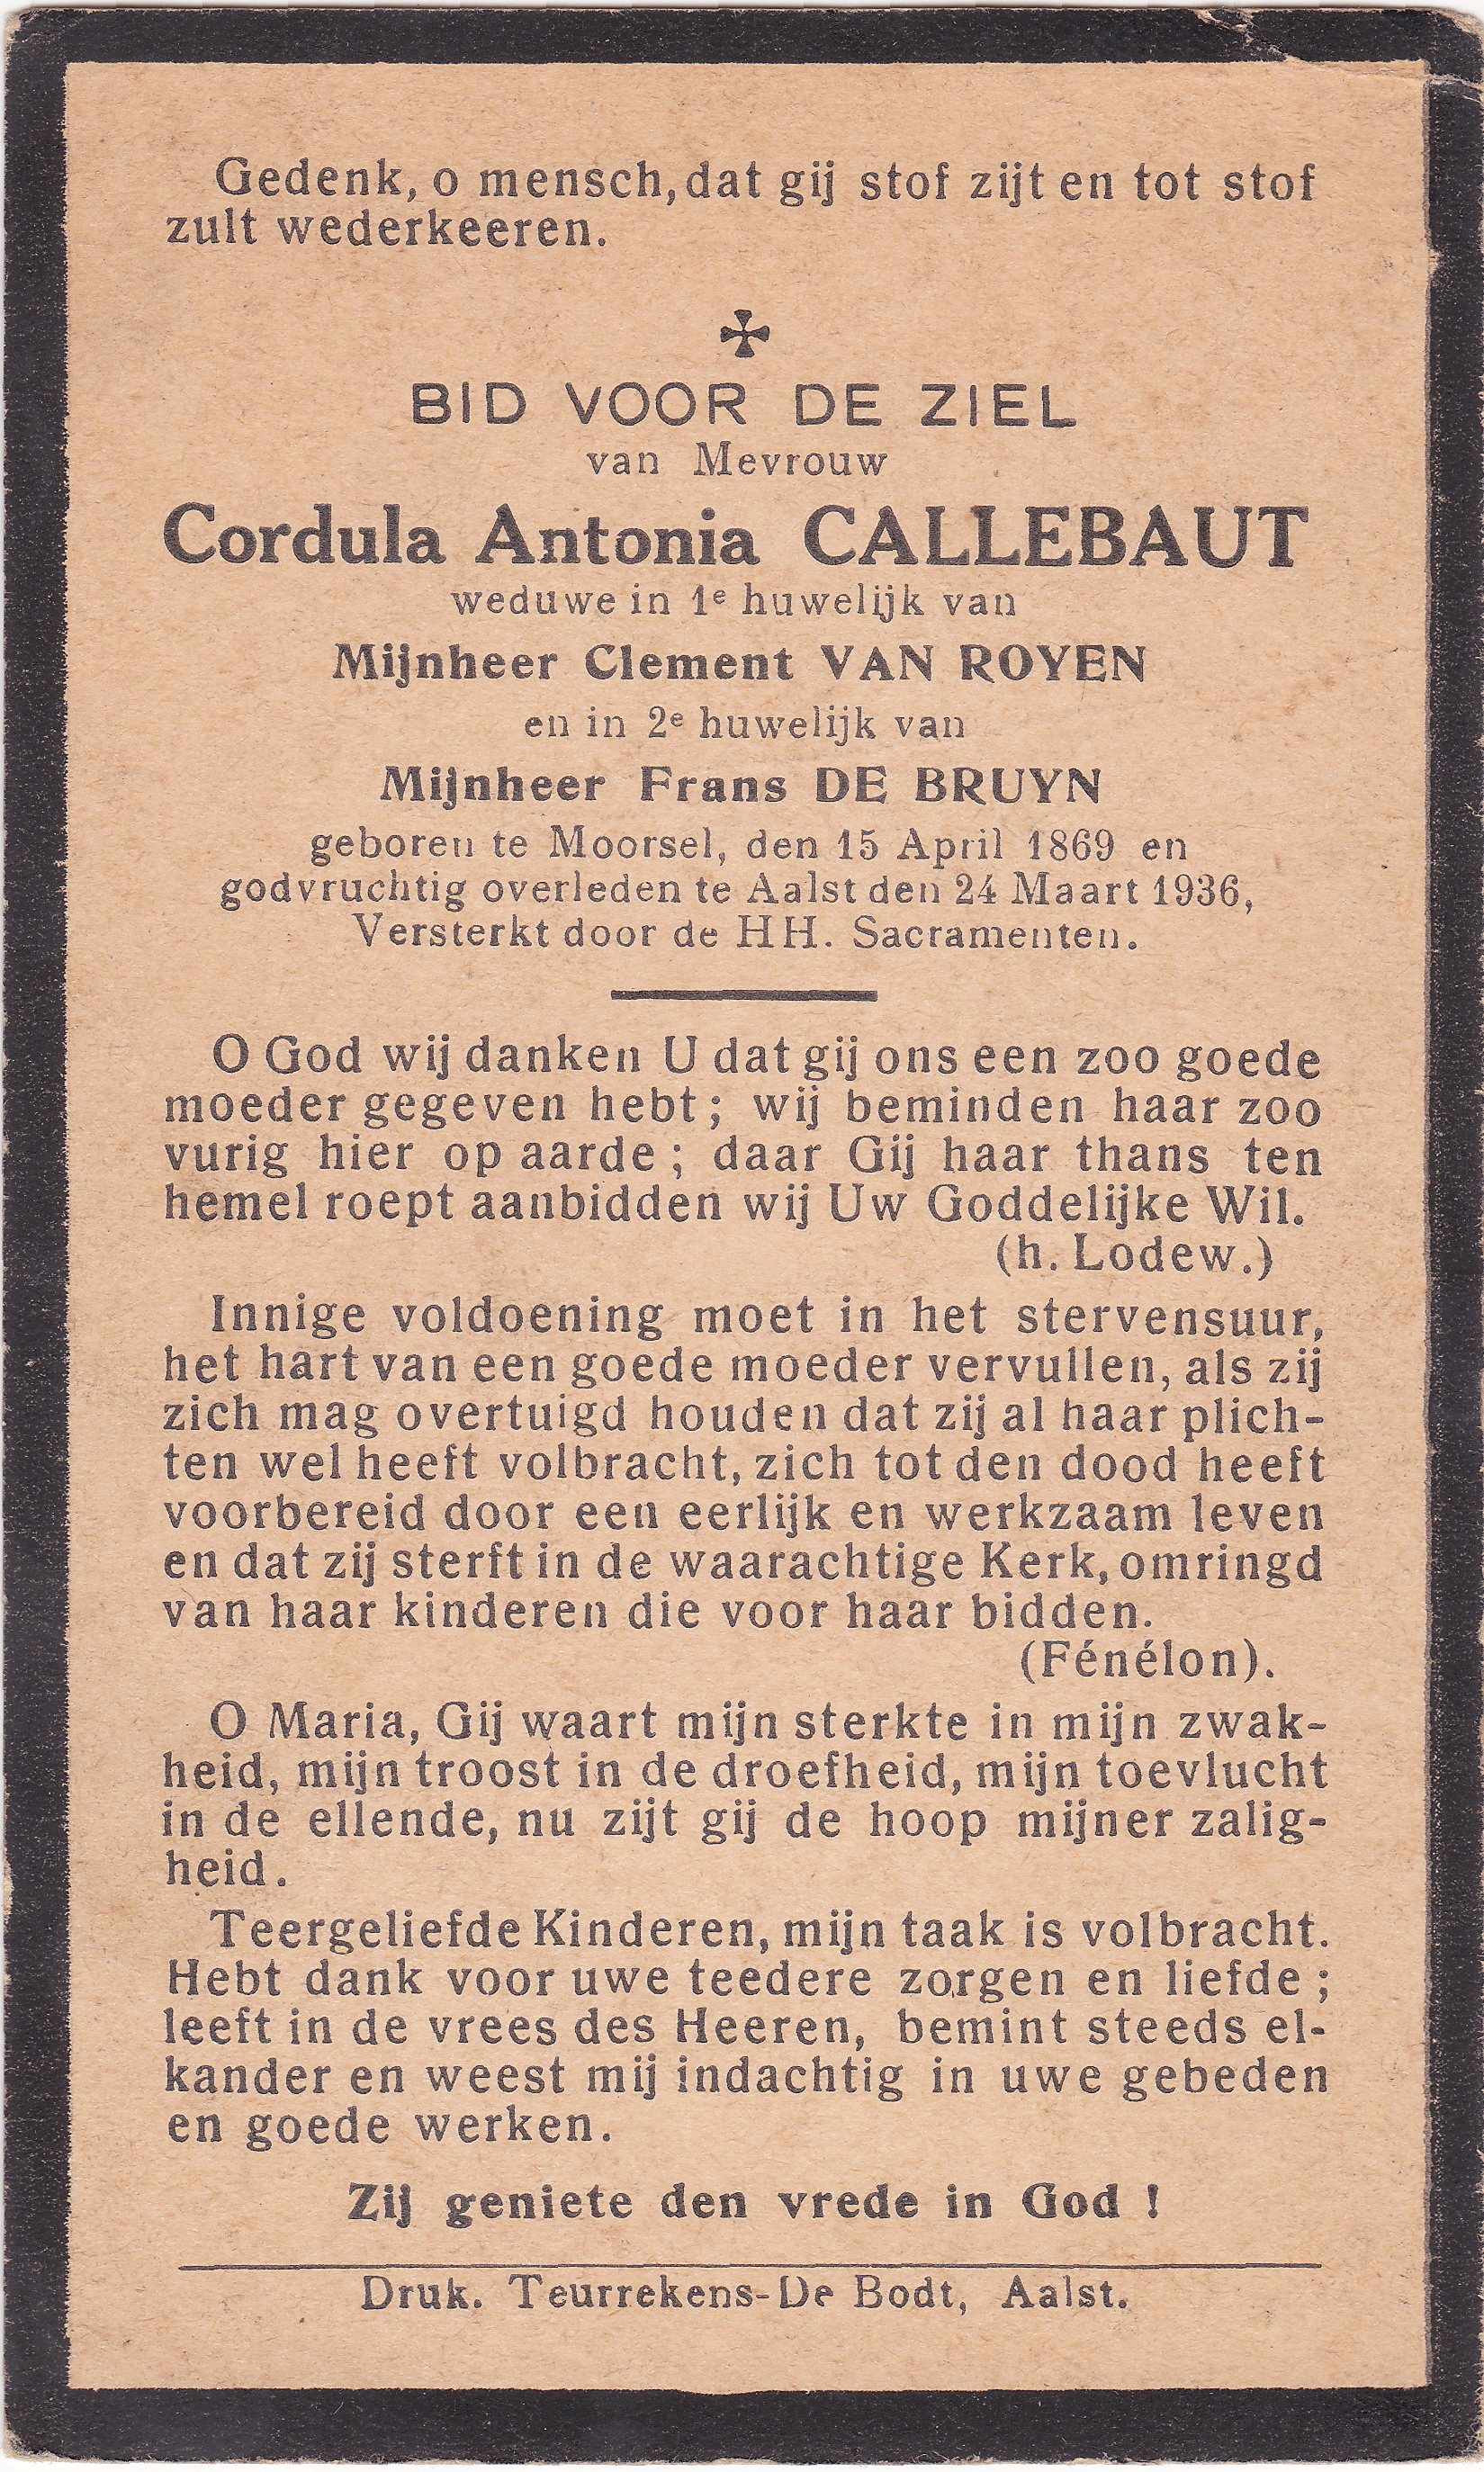 Callebaut Cordula Antonia